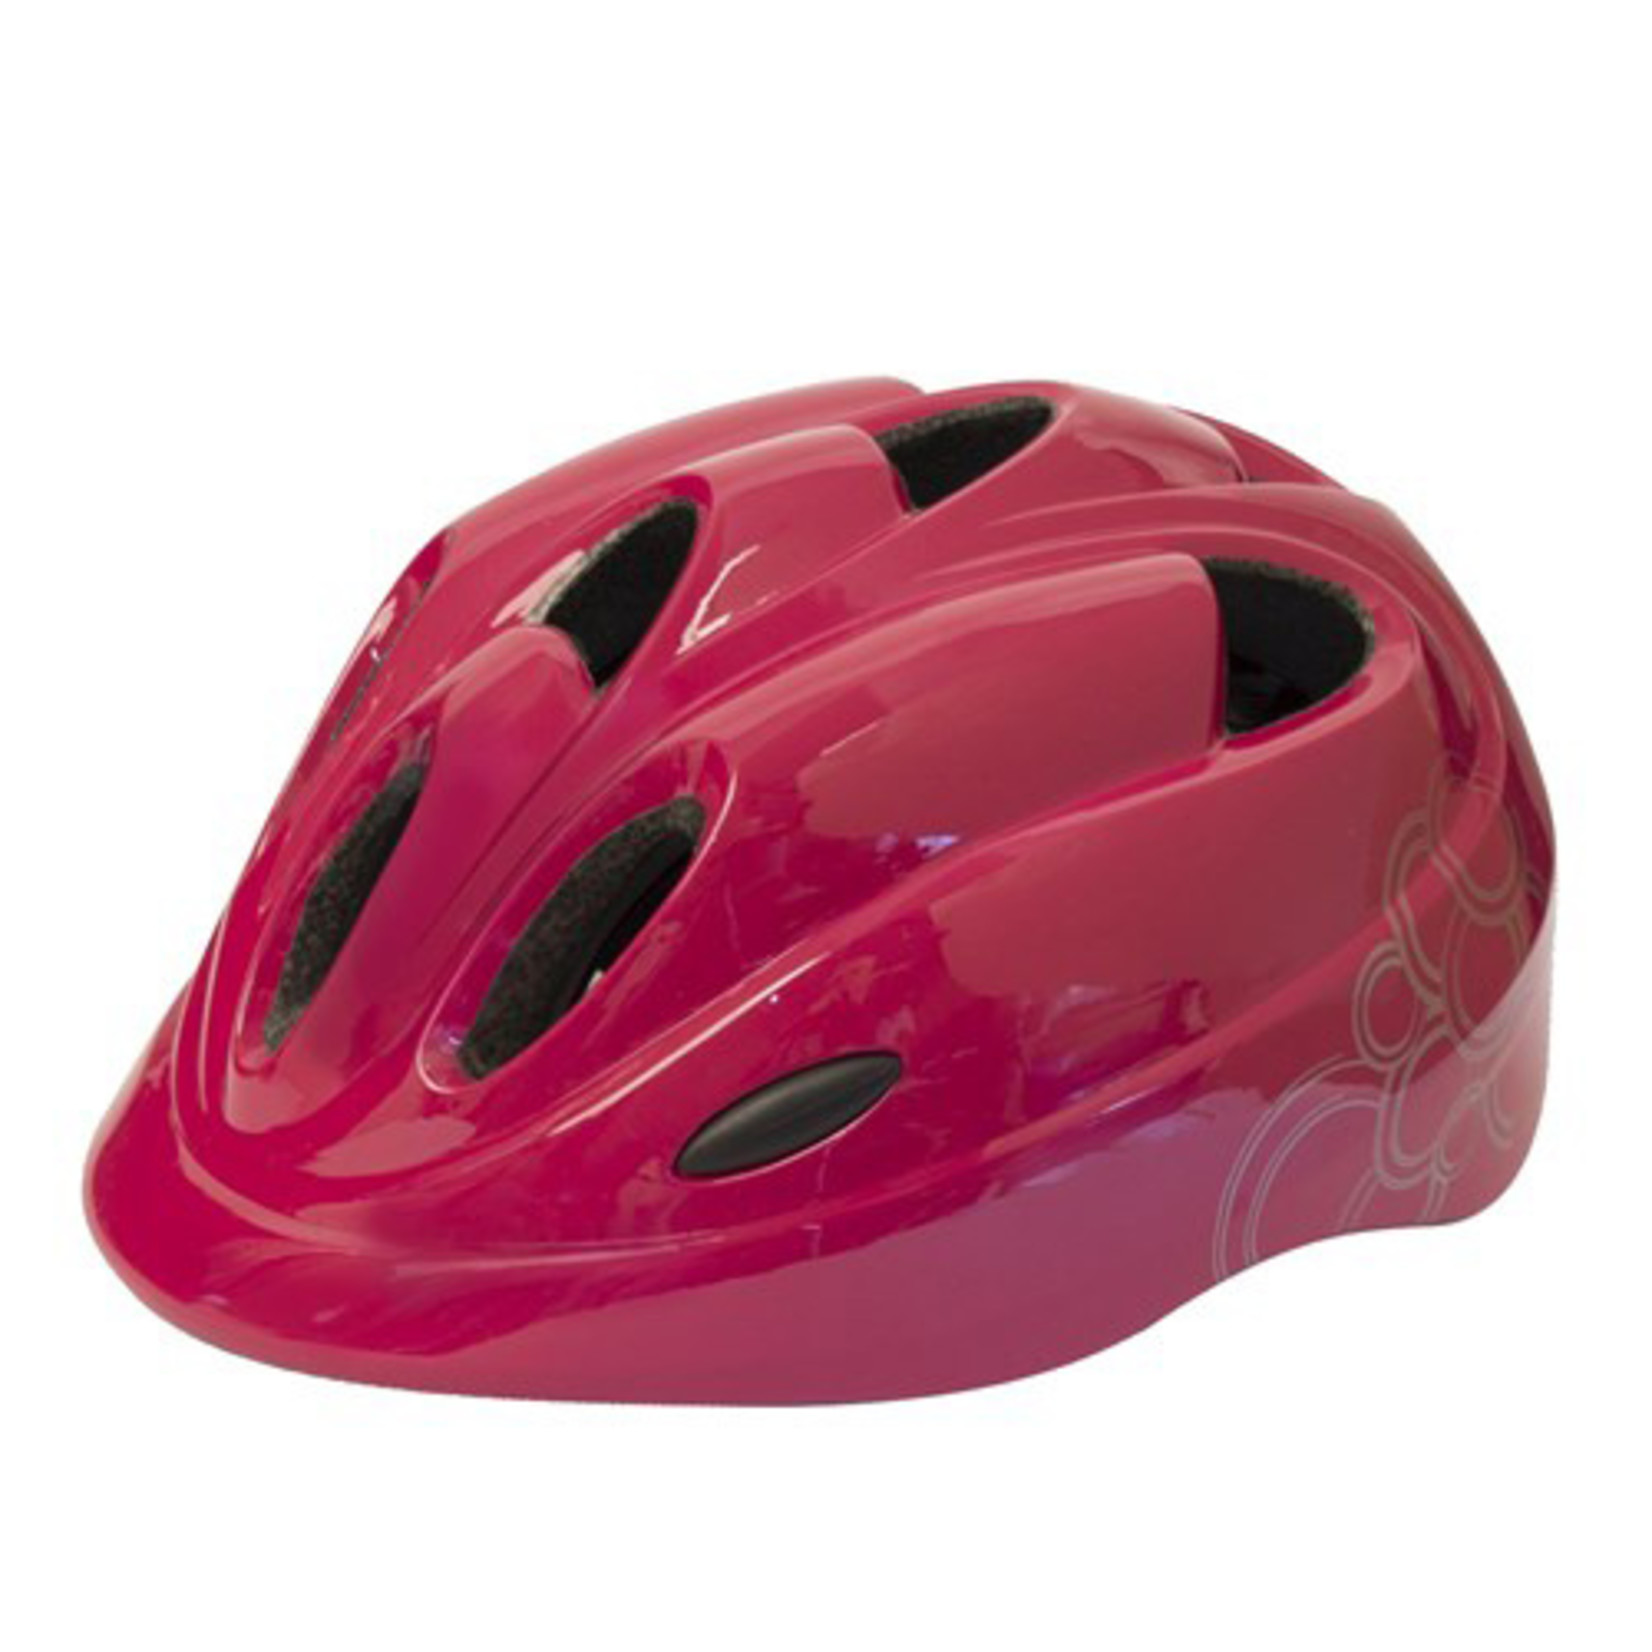 Azur Azur Bike Helmet - J36 Series Dual In-Mould Shell - Pink - 50-54cm Small